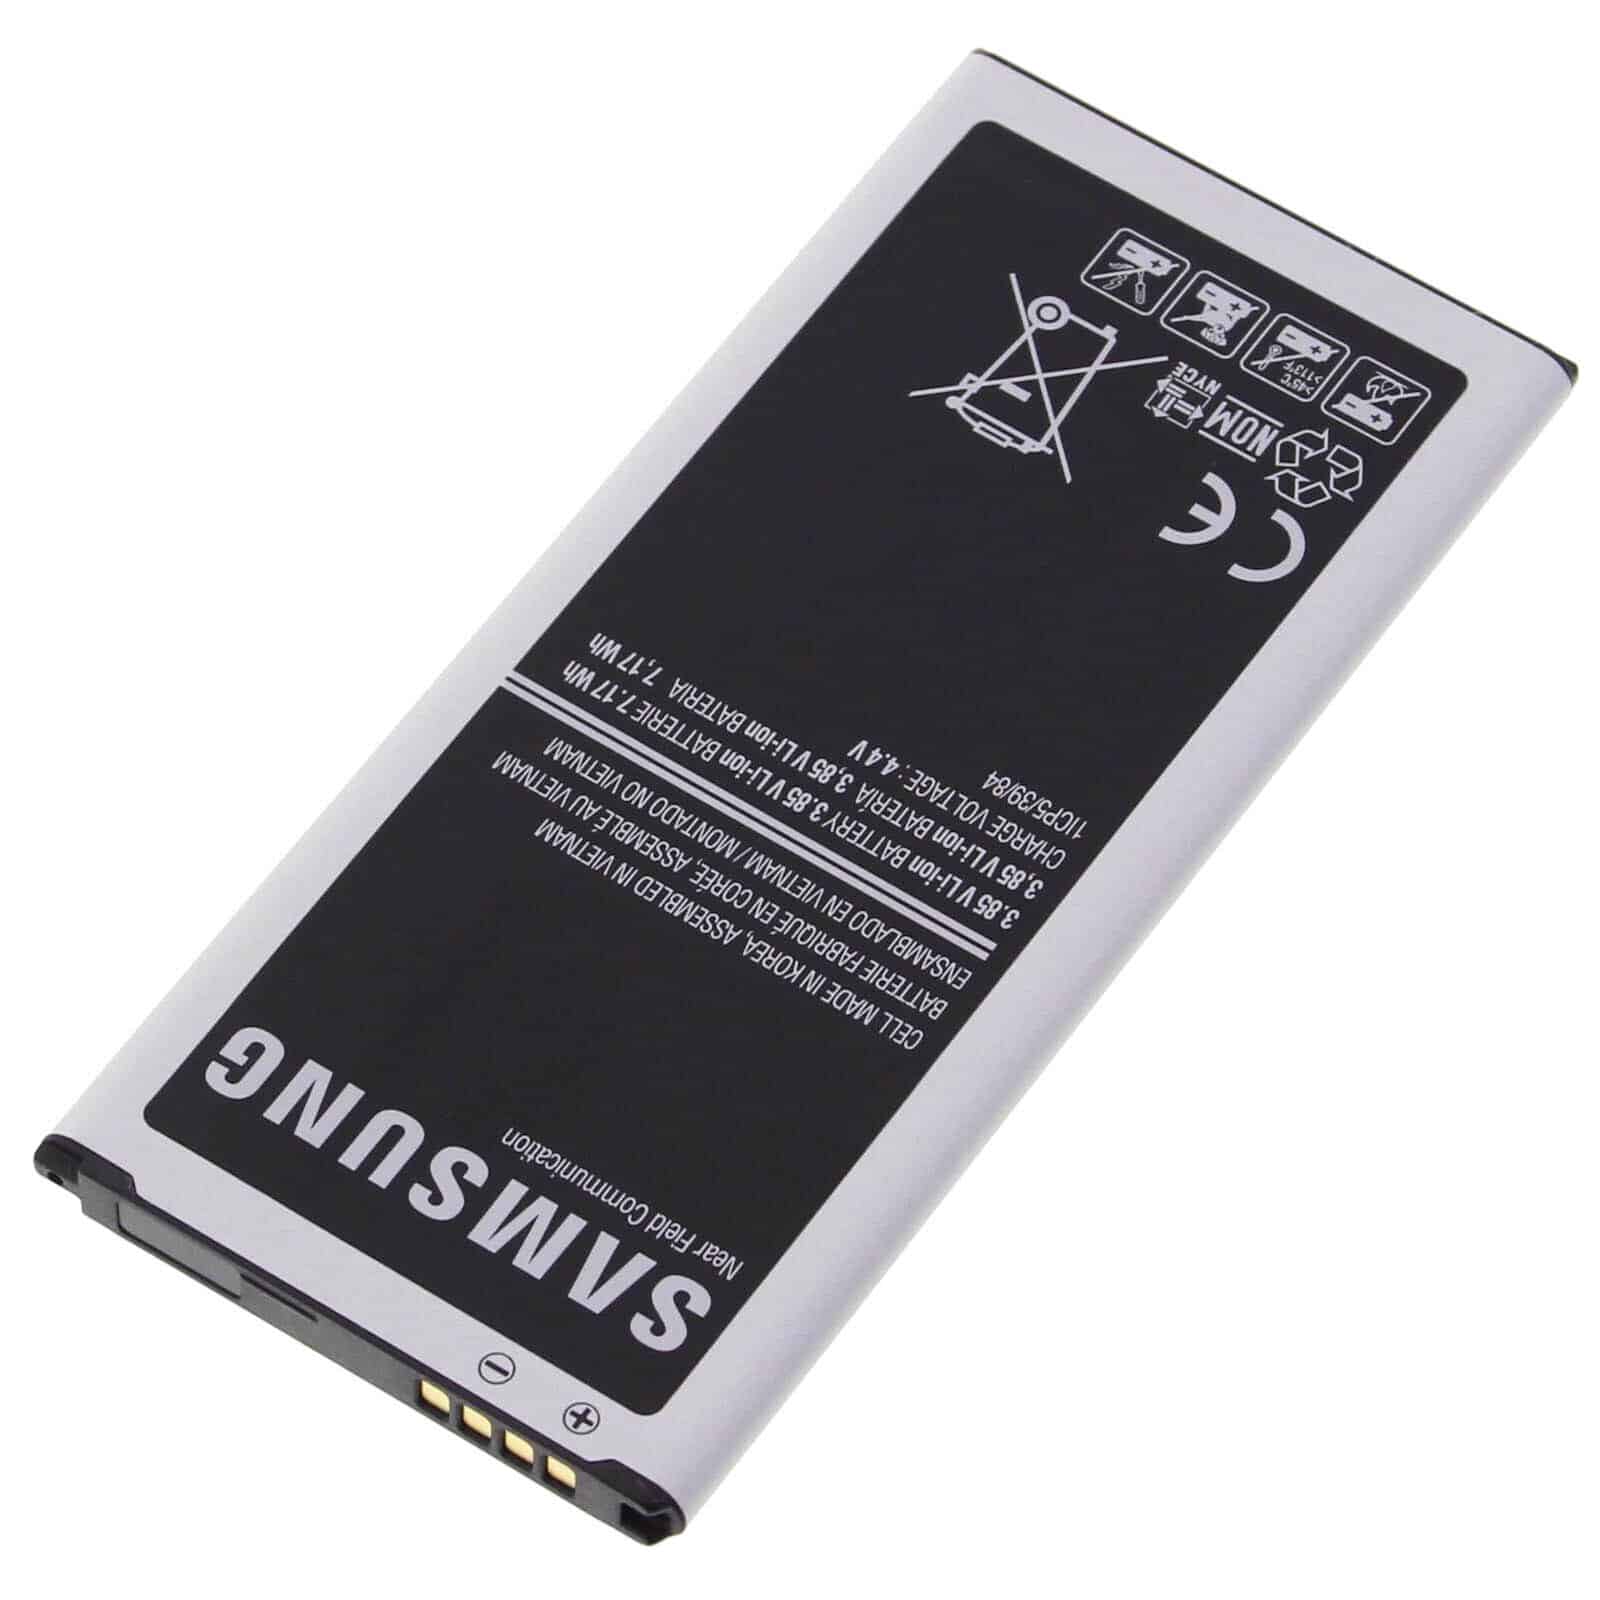 Samsung Genuine Battery EB-BG850BBE For Samsung Galaxy Alpha (SM-G850F) 1860mAh